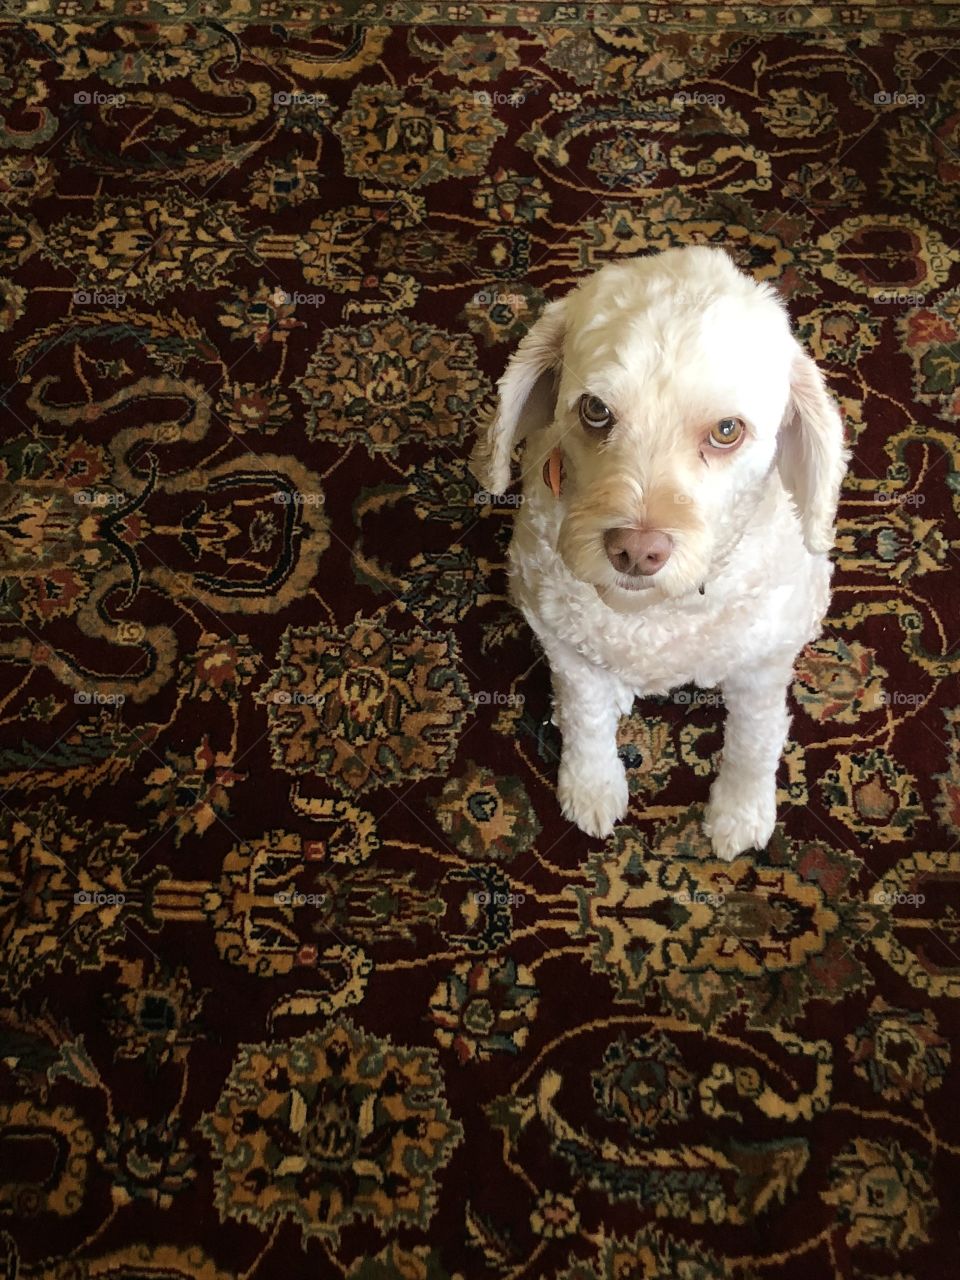 Adorable doggo sitting on the carpet.